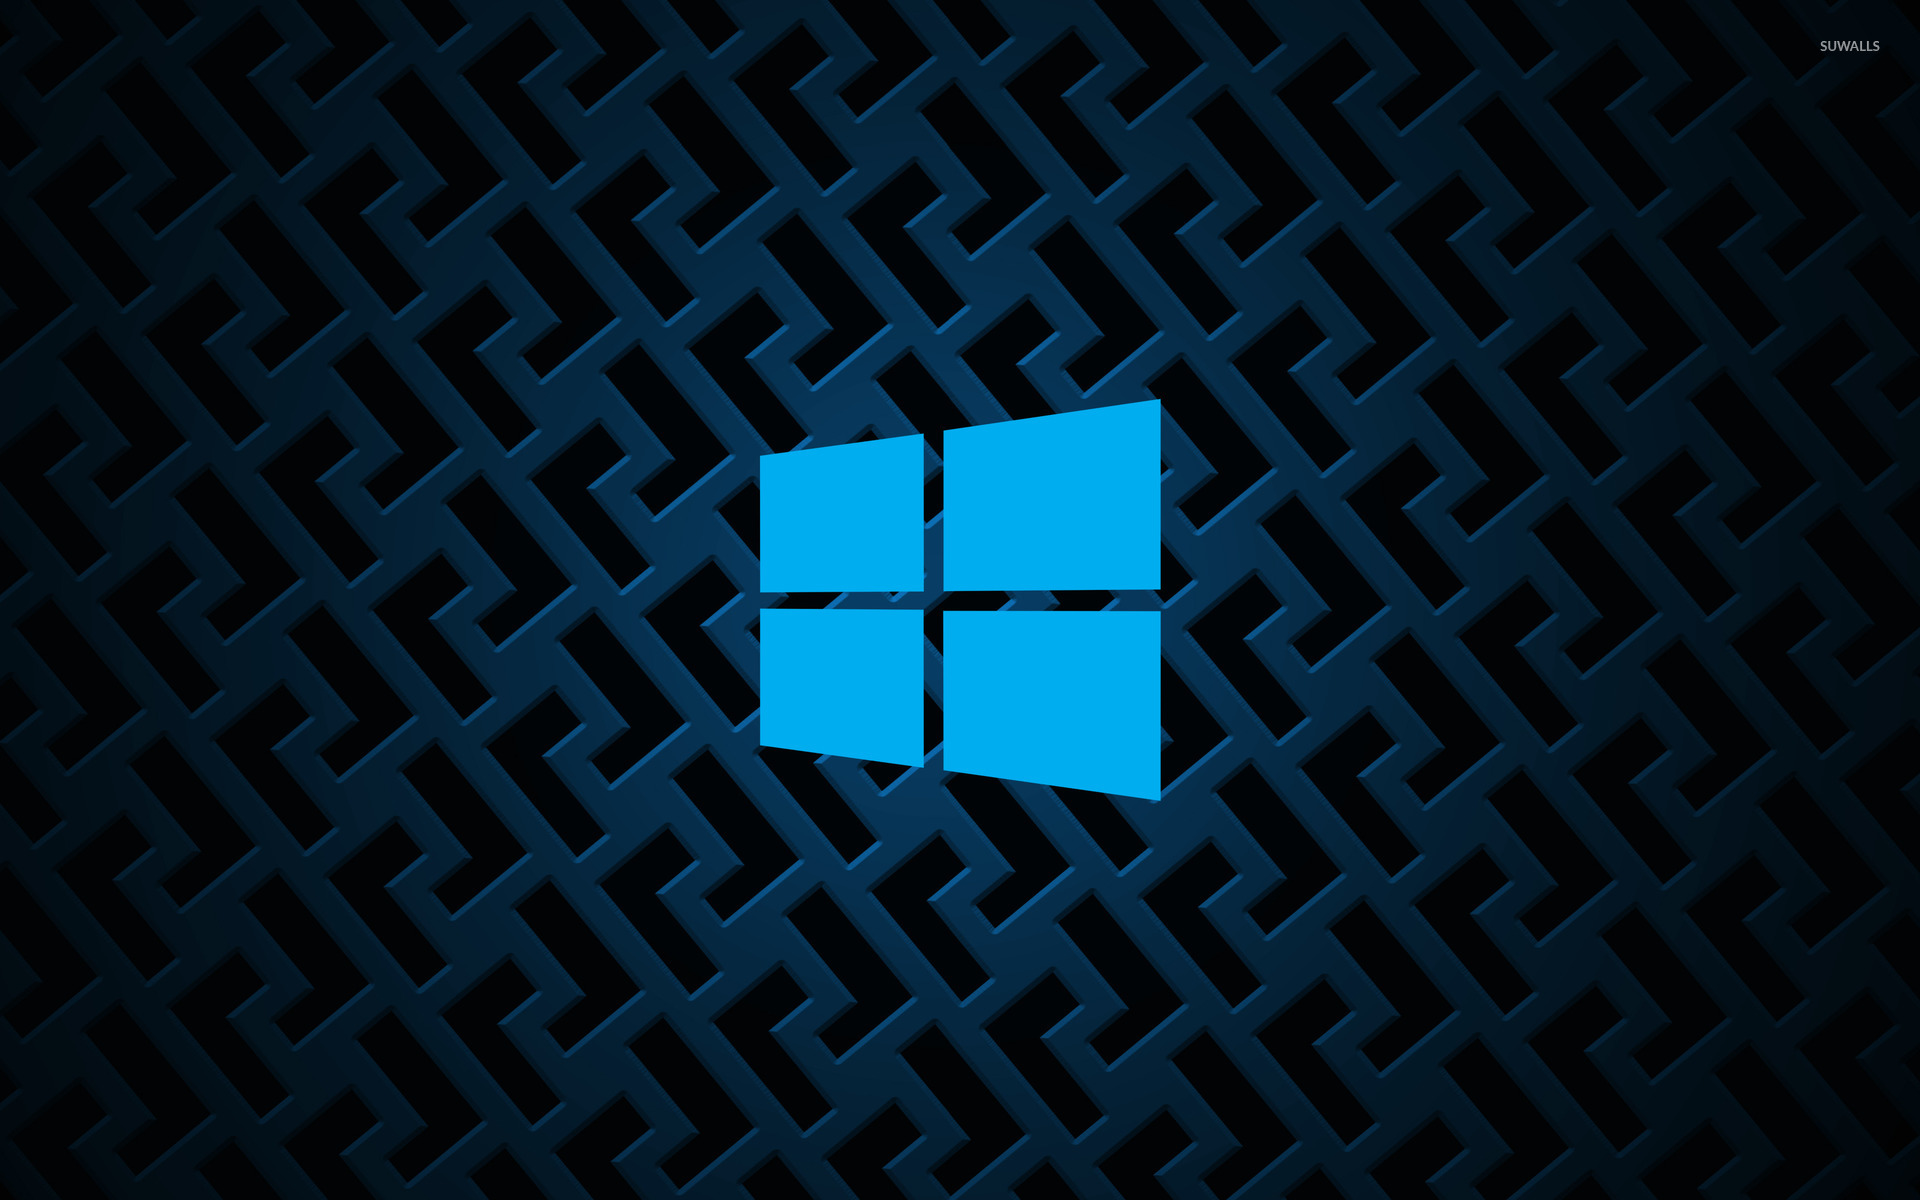 Windows 10 on metallic grid simple blue logo wallpaper - Computer ...